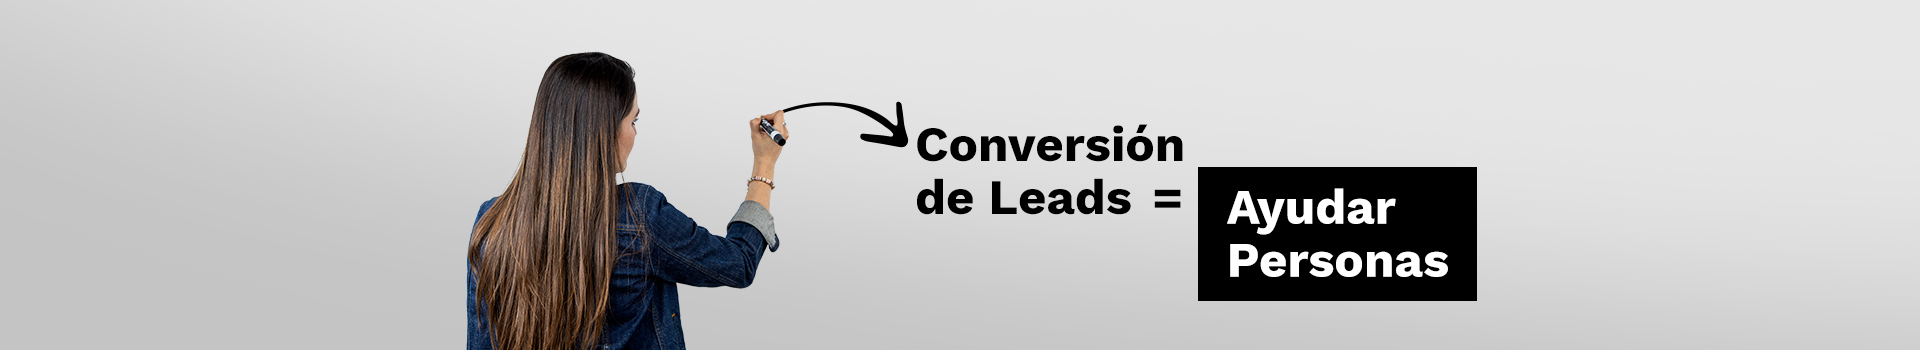 cliento-conversion-leads-banner